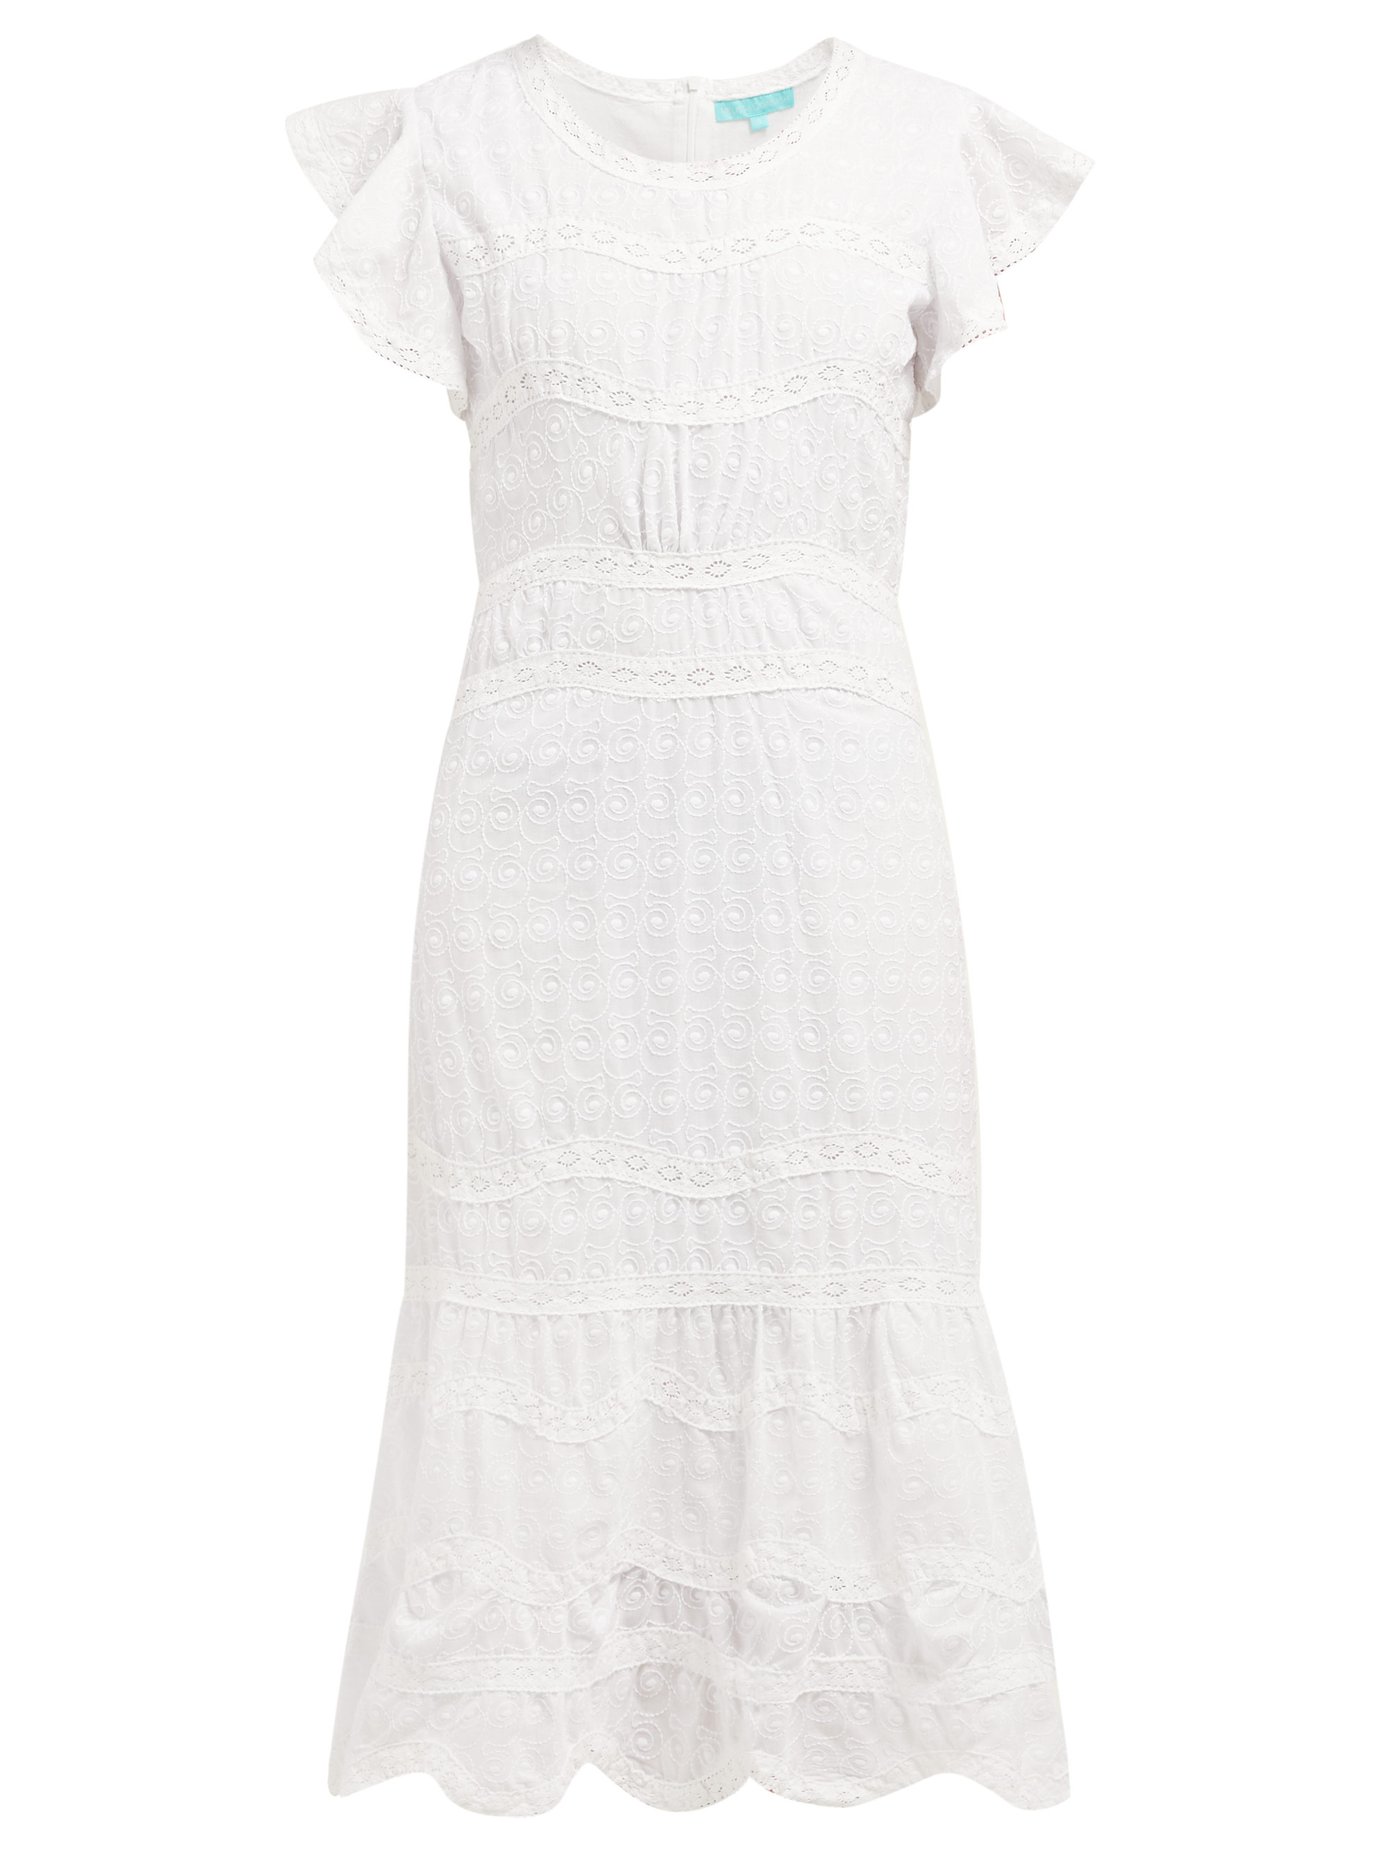 white tea dress uk